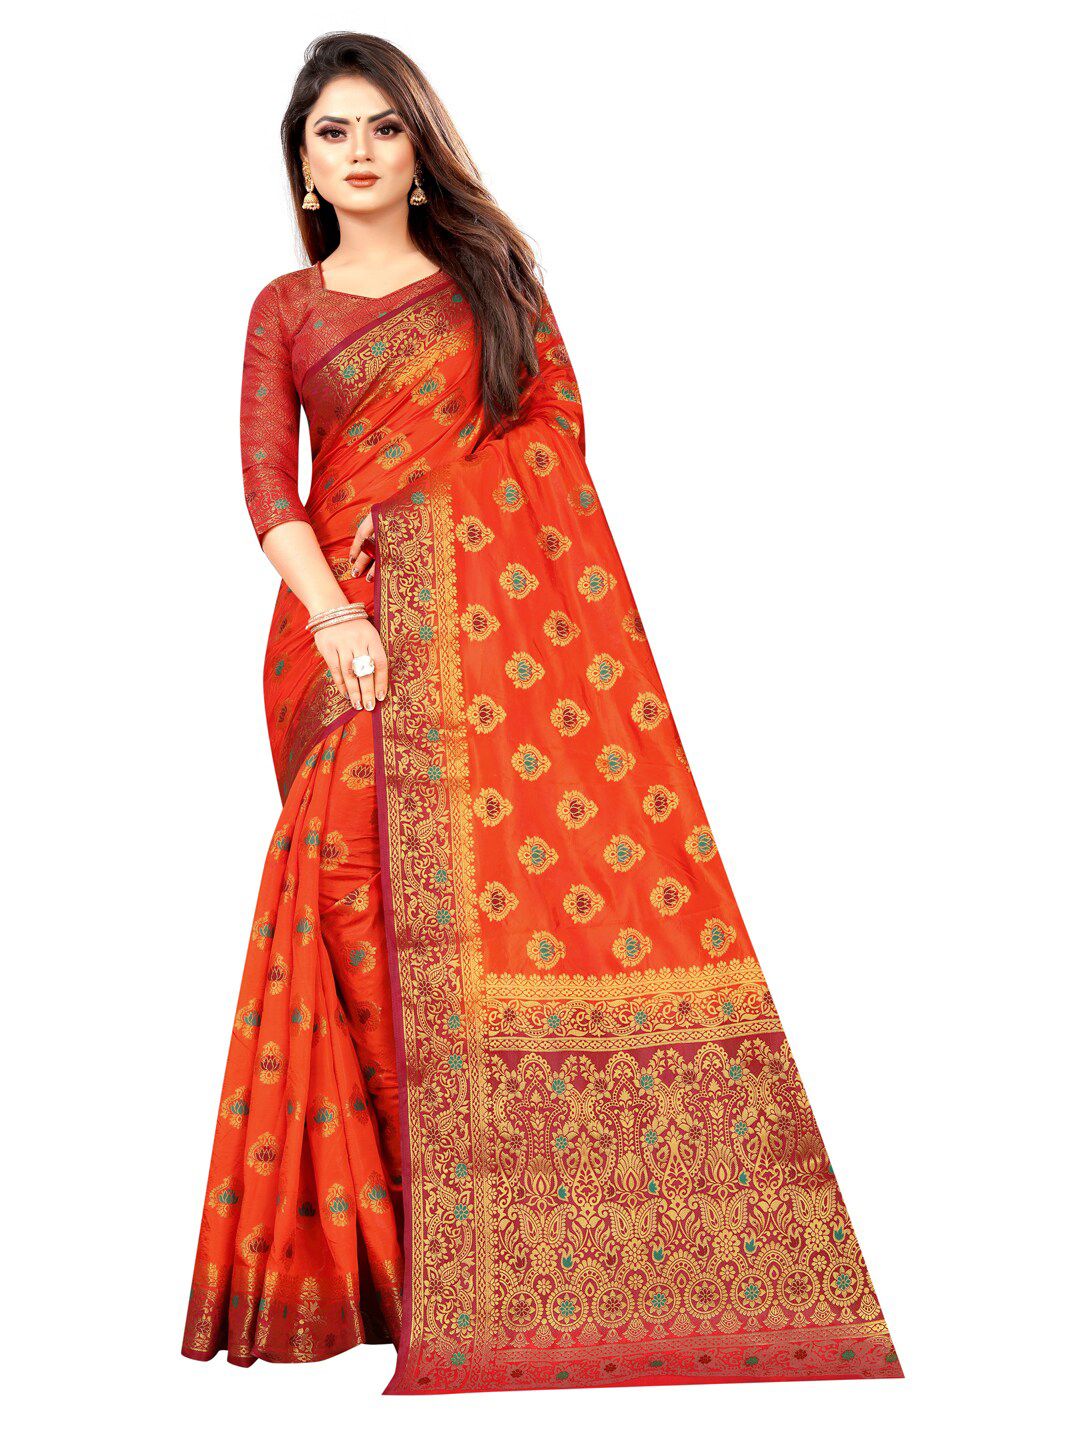 PERFECT WEAR Orange & Red Woven Design Banarasi Saree Price in India